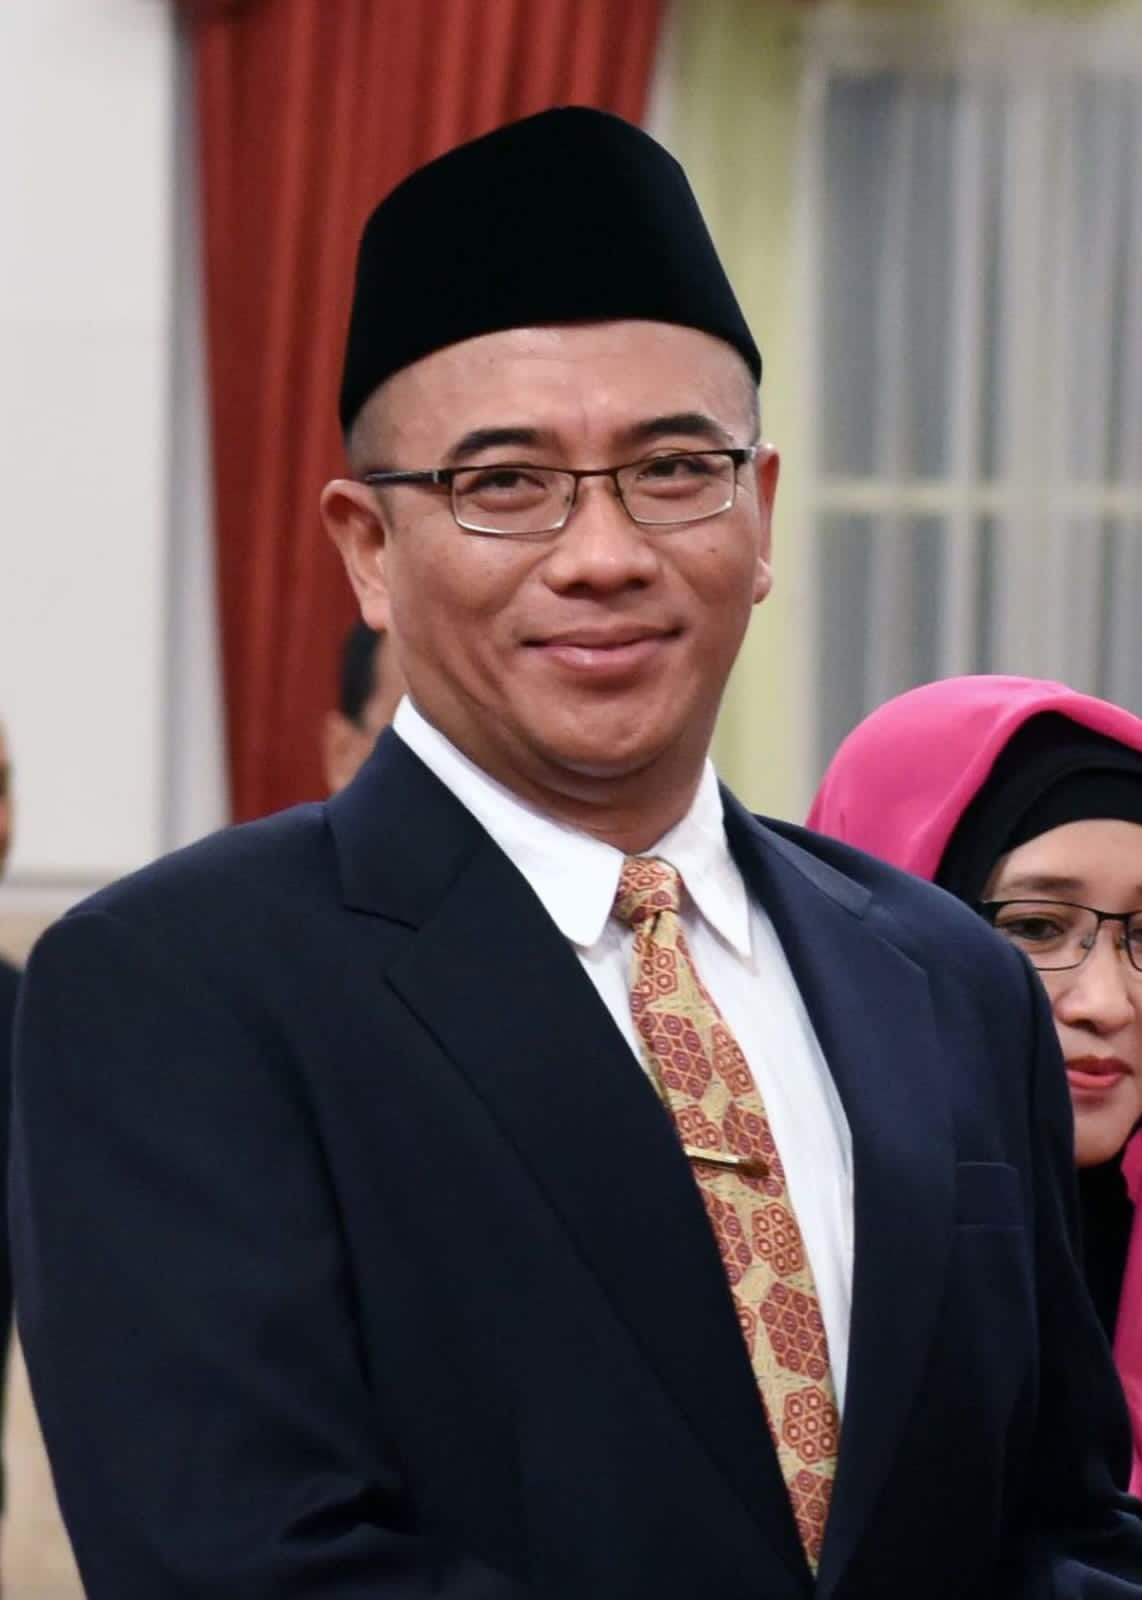 Ketua Komisi Pemilihan Umum (KPU) Hasyim Asy'ari